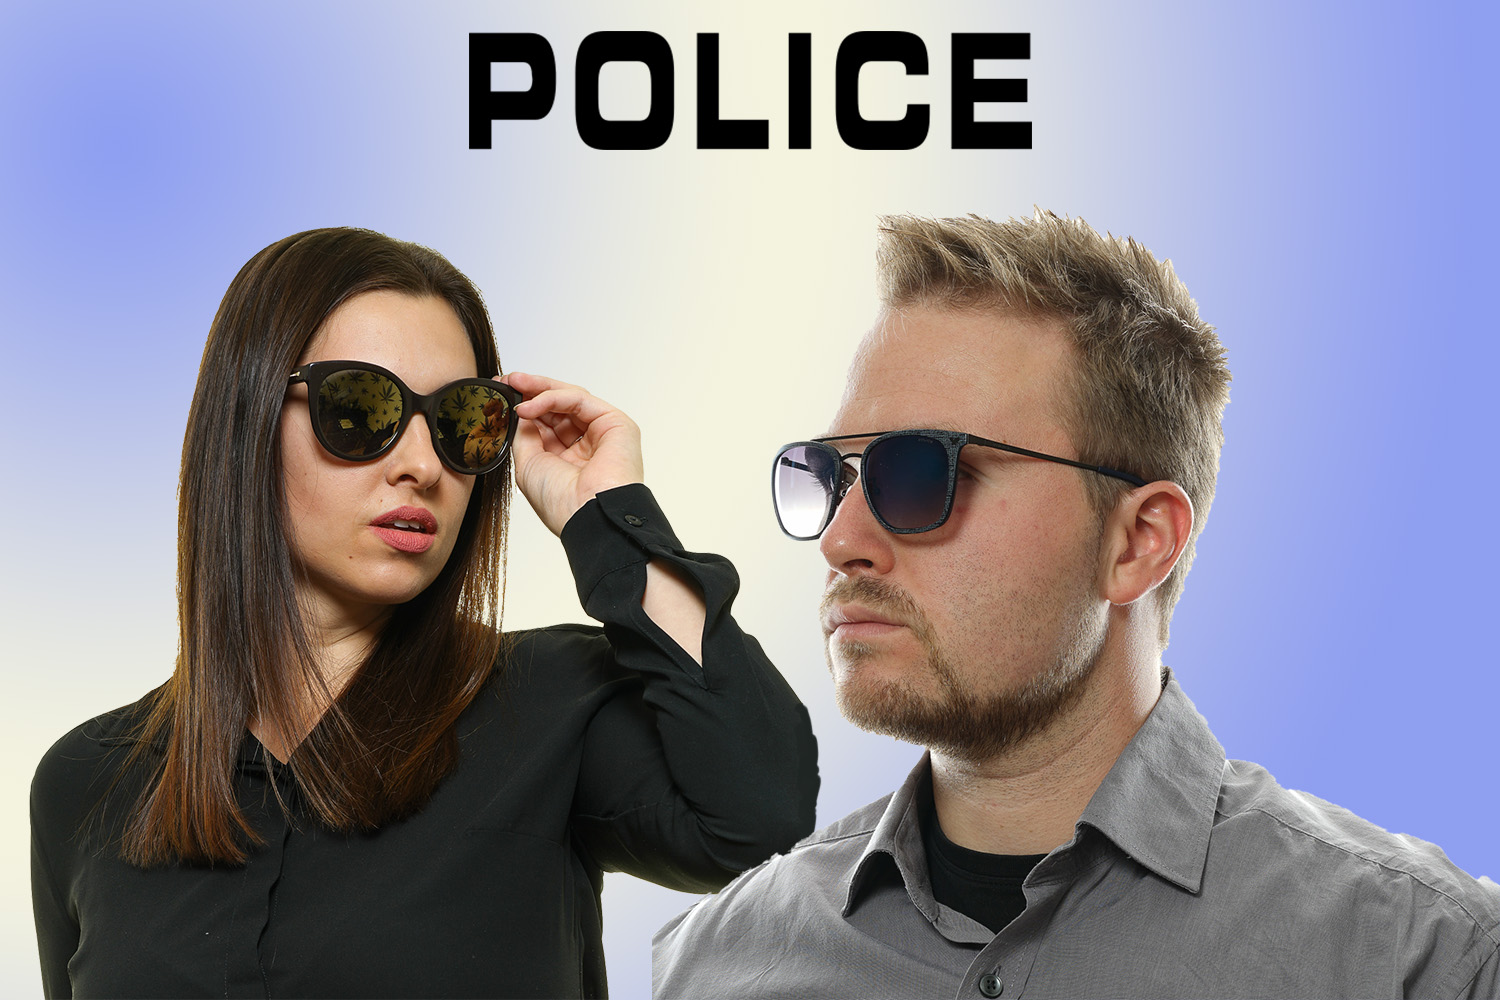 Police sunglasses - Groove 4 Man Sunglasses Police SPLF18E Grey, Brown